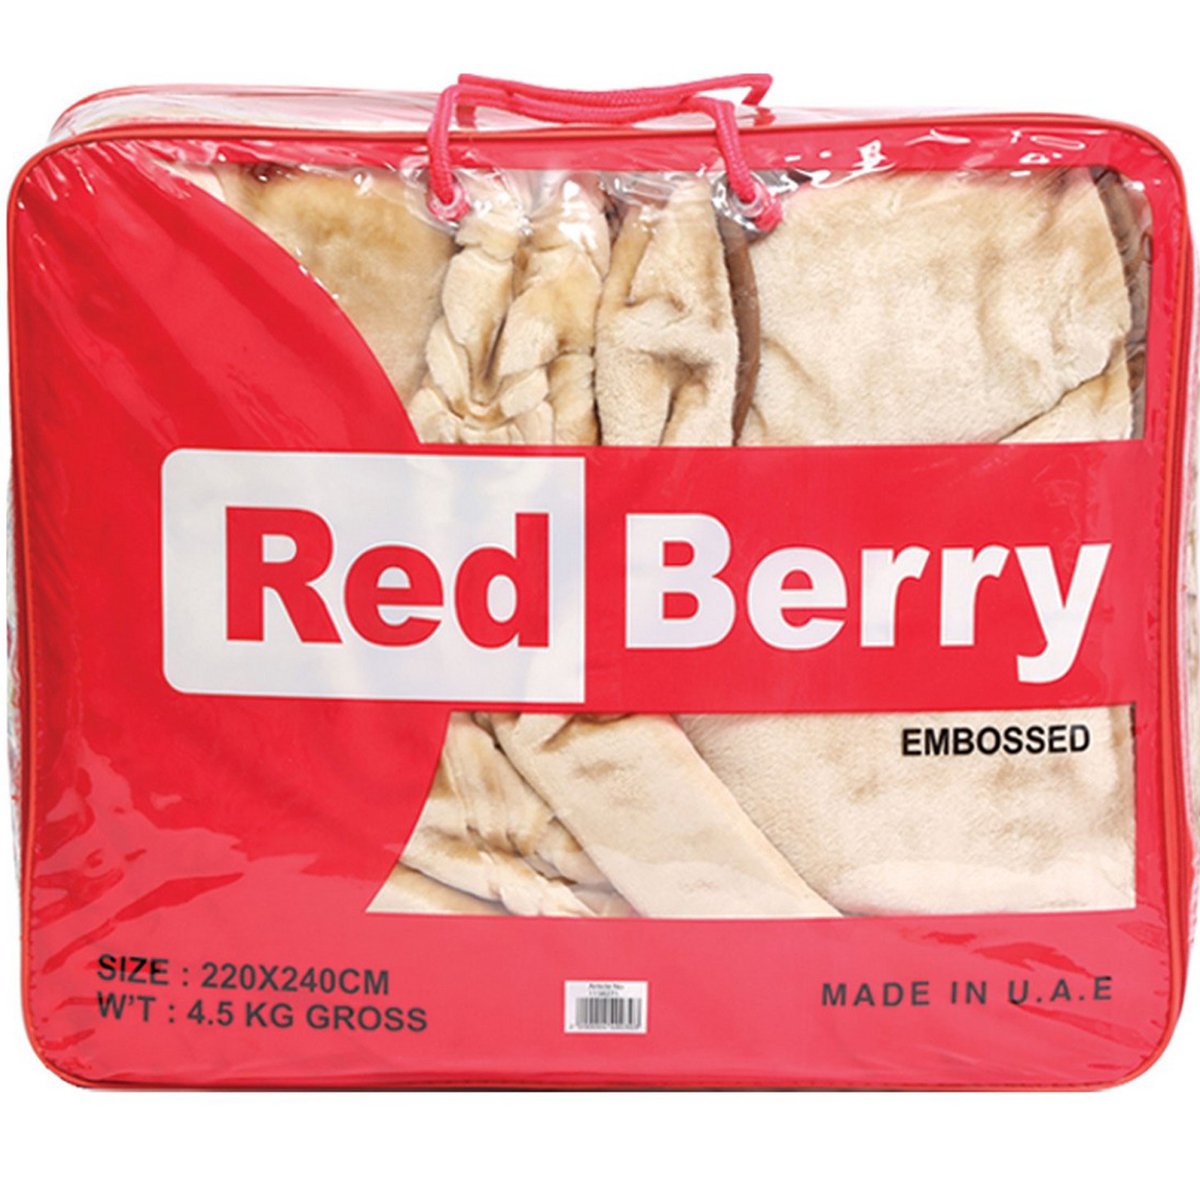 Red Berry Blanket Embossed 220x240cm